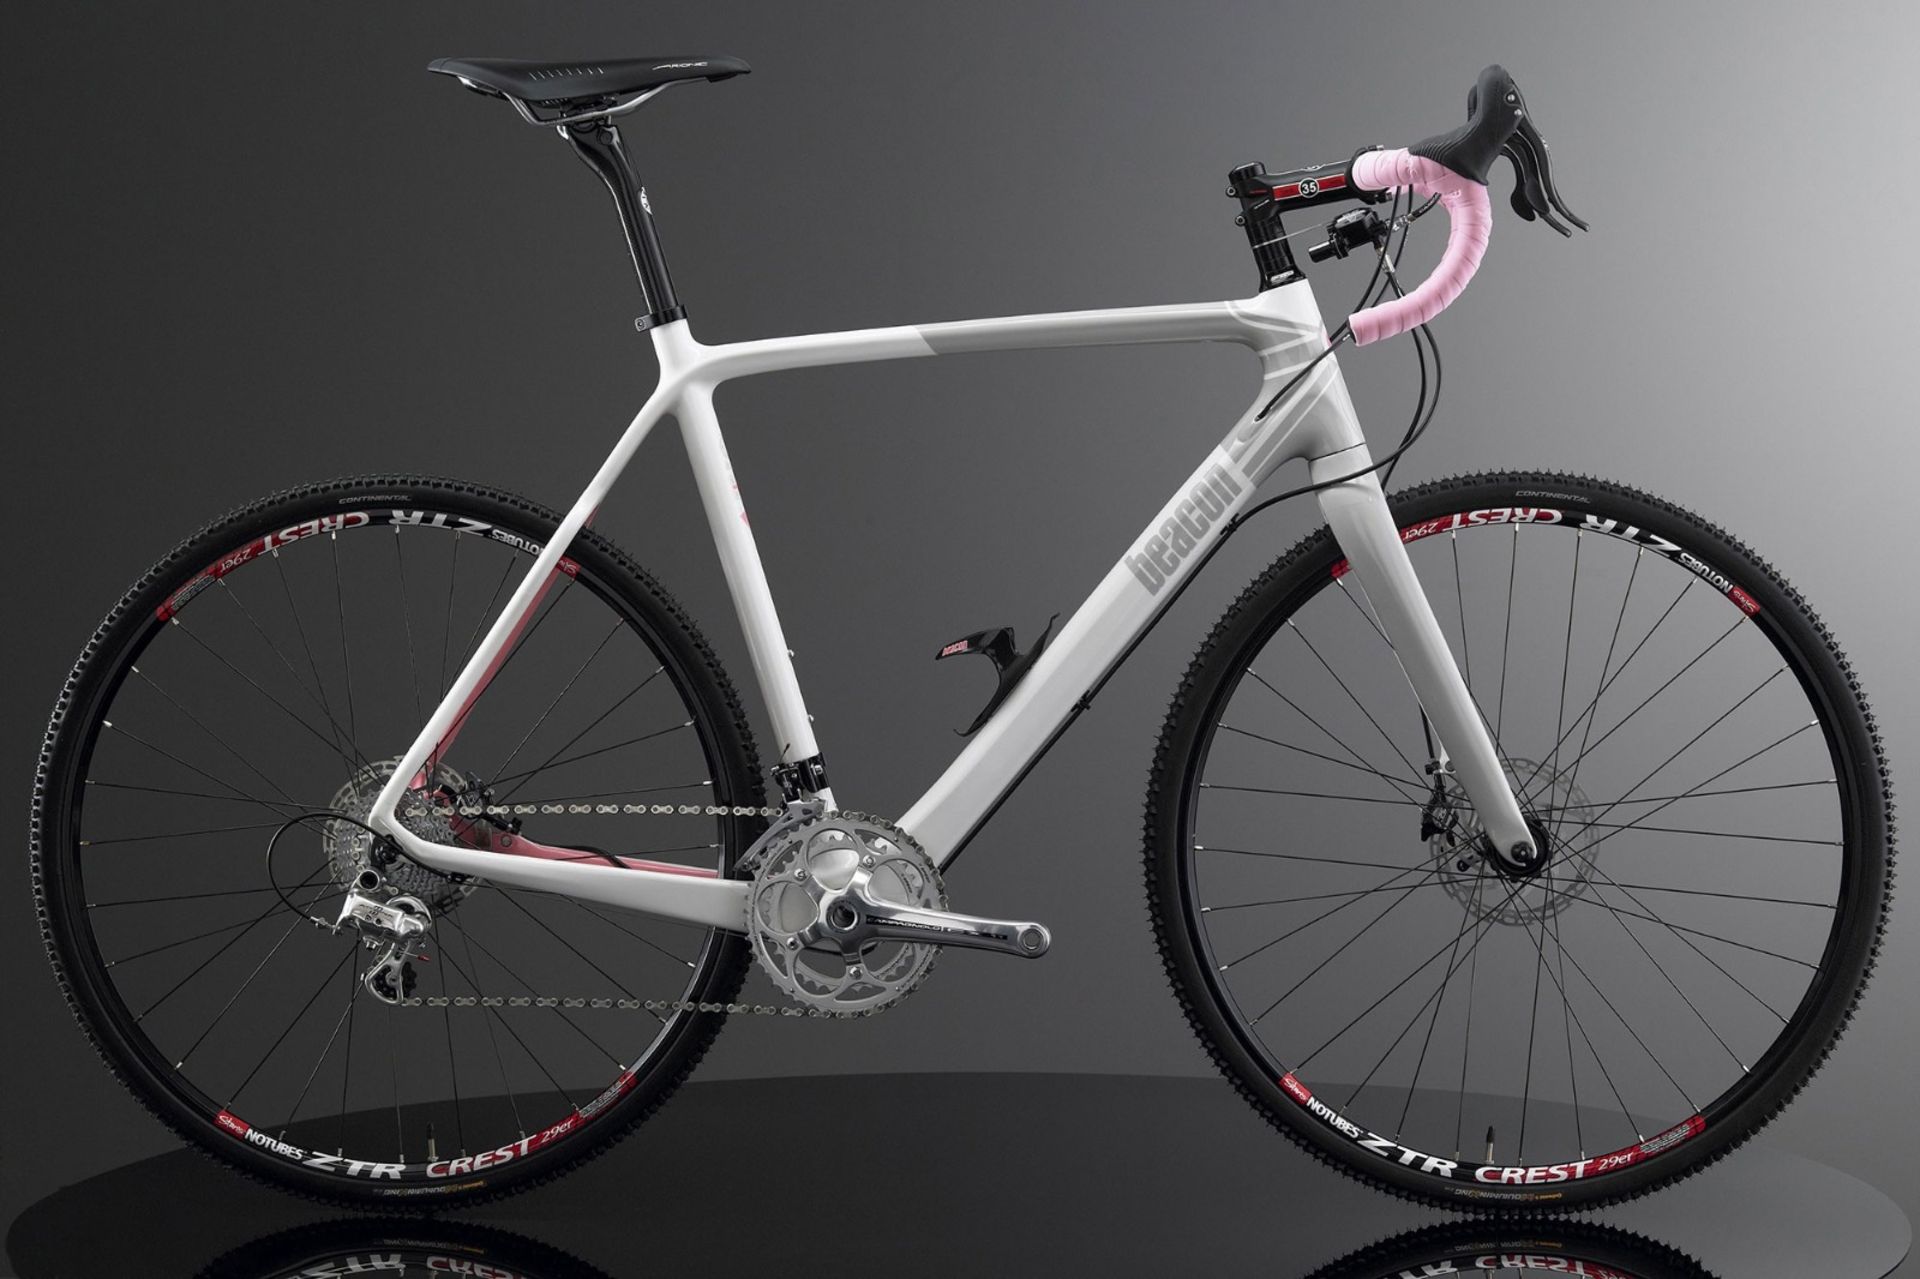 1 x Beacon Model BF-45, Size 560, Carbon Fibre Bike Frame in White & Grey. - Image 2 of 3